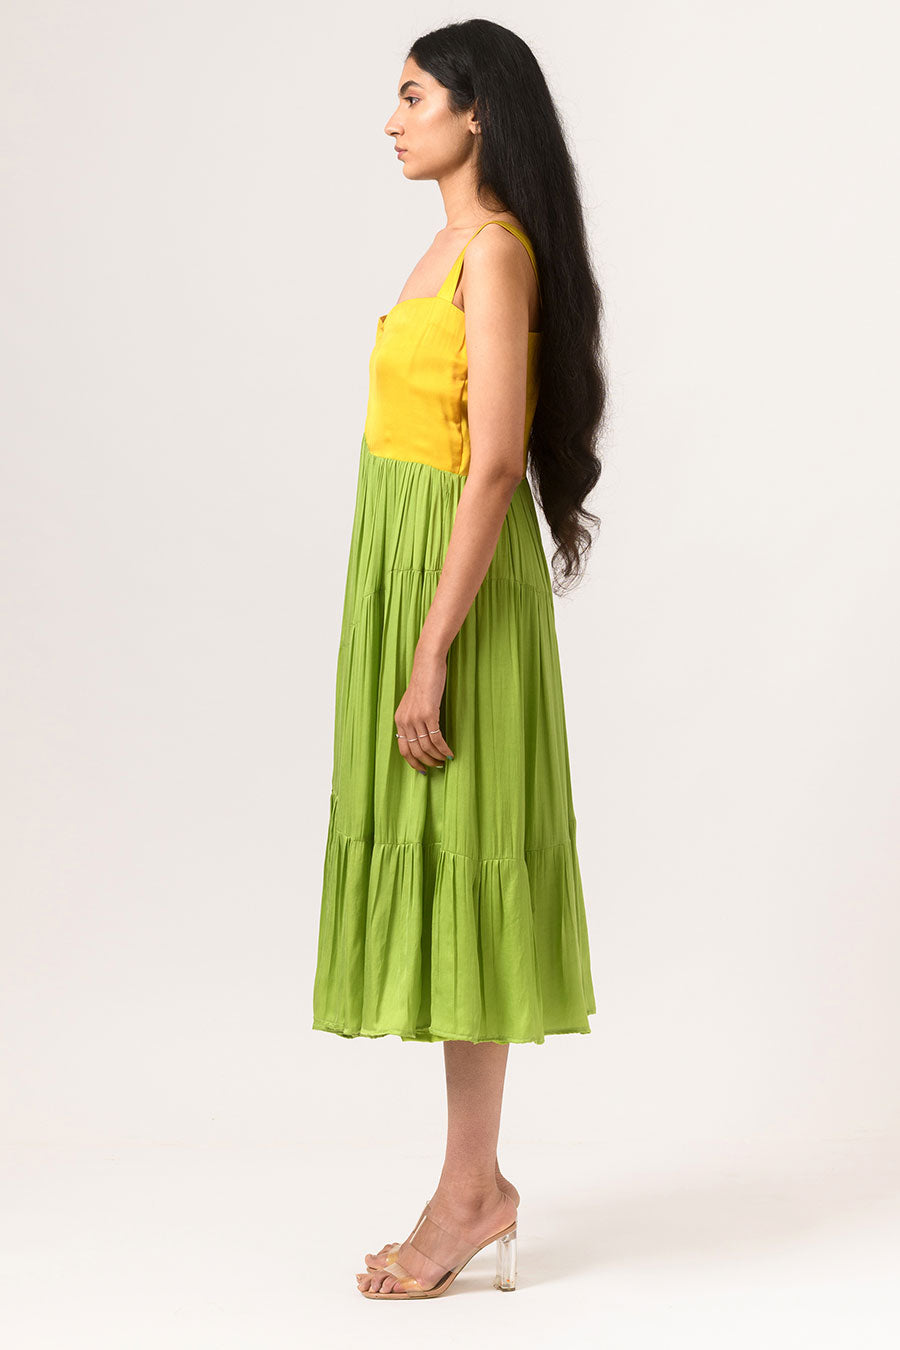 Yellow-Green Asymmetric Gathered Dress